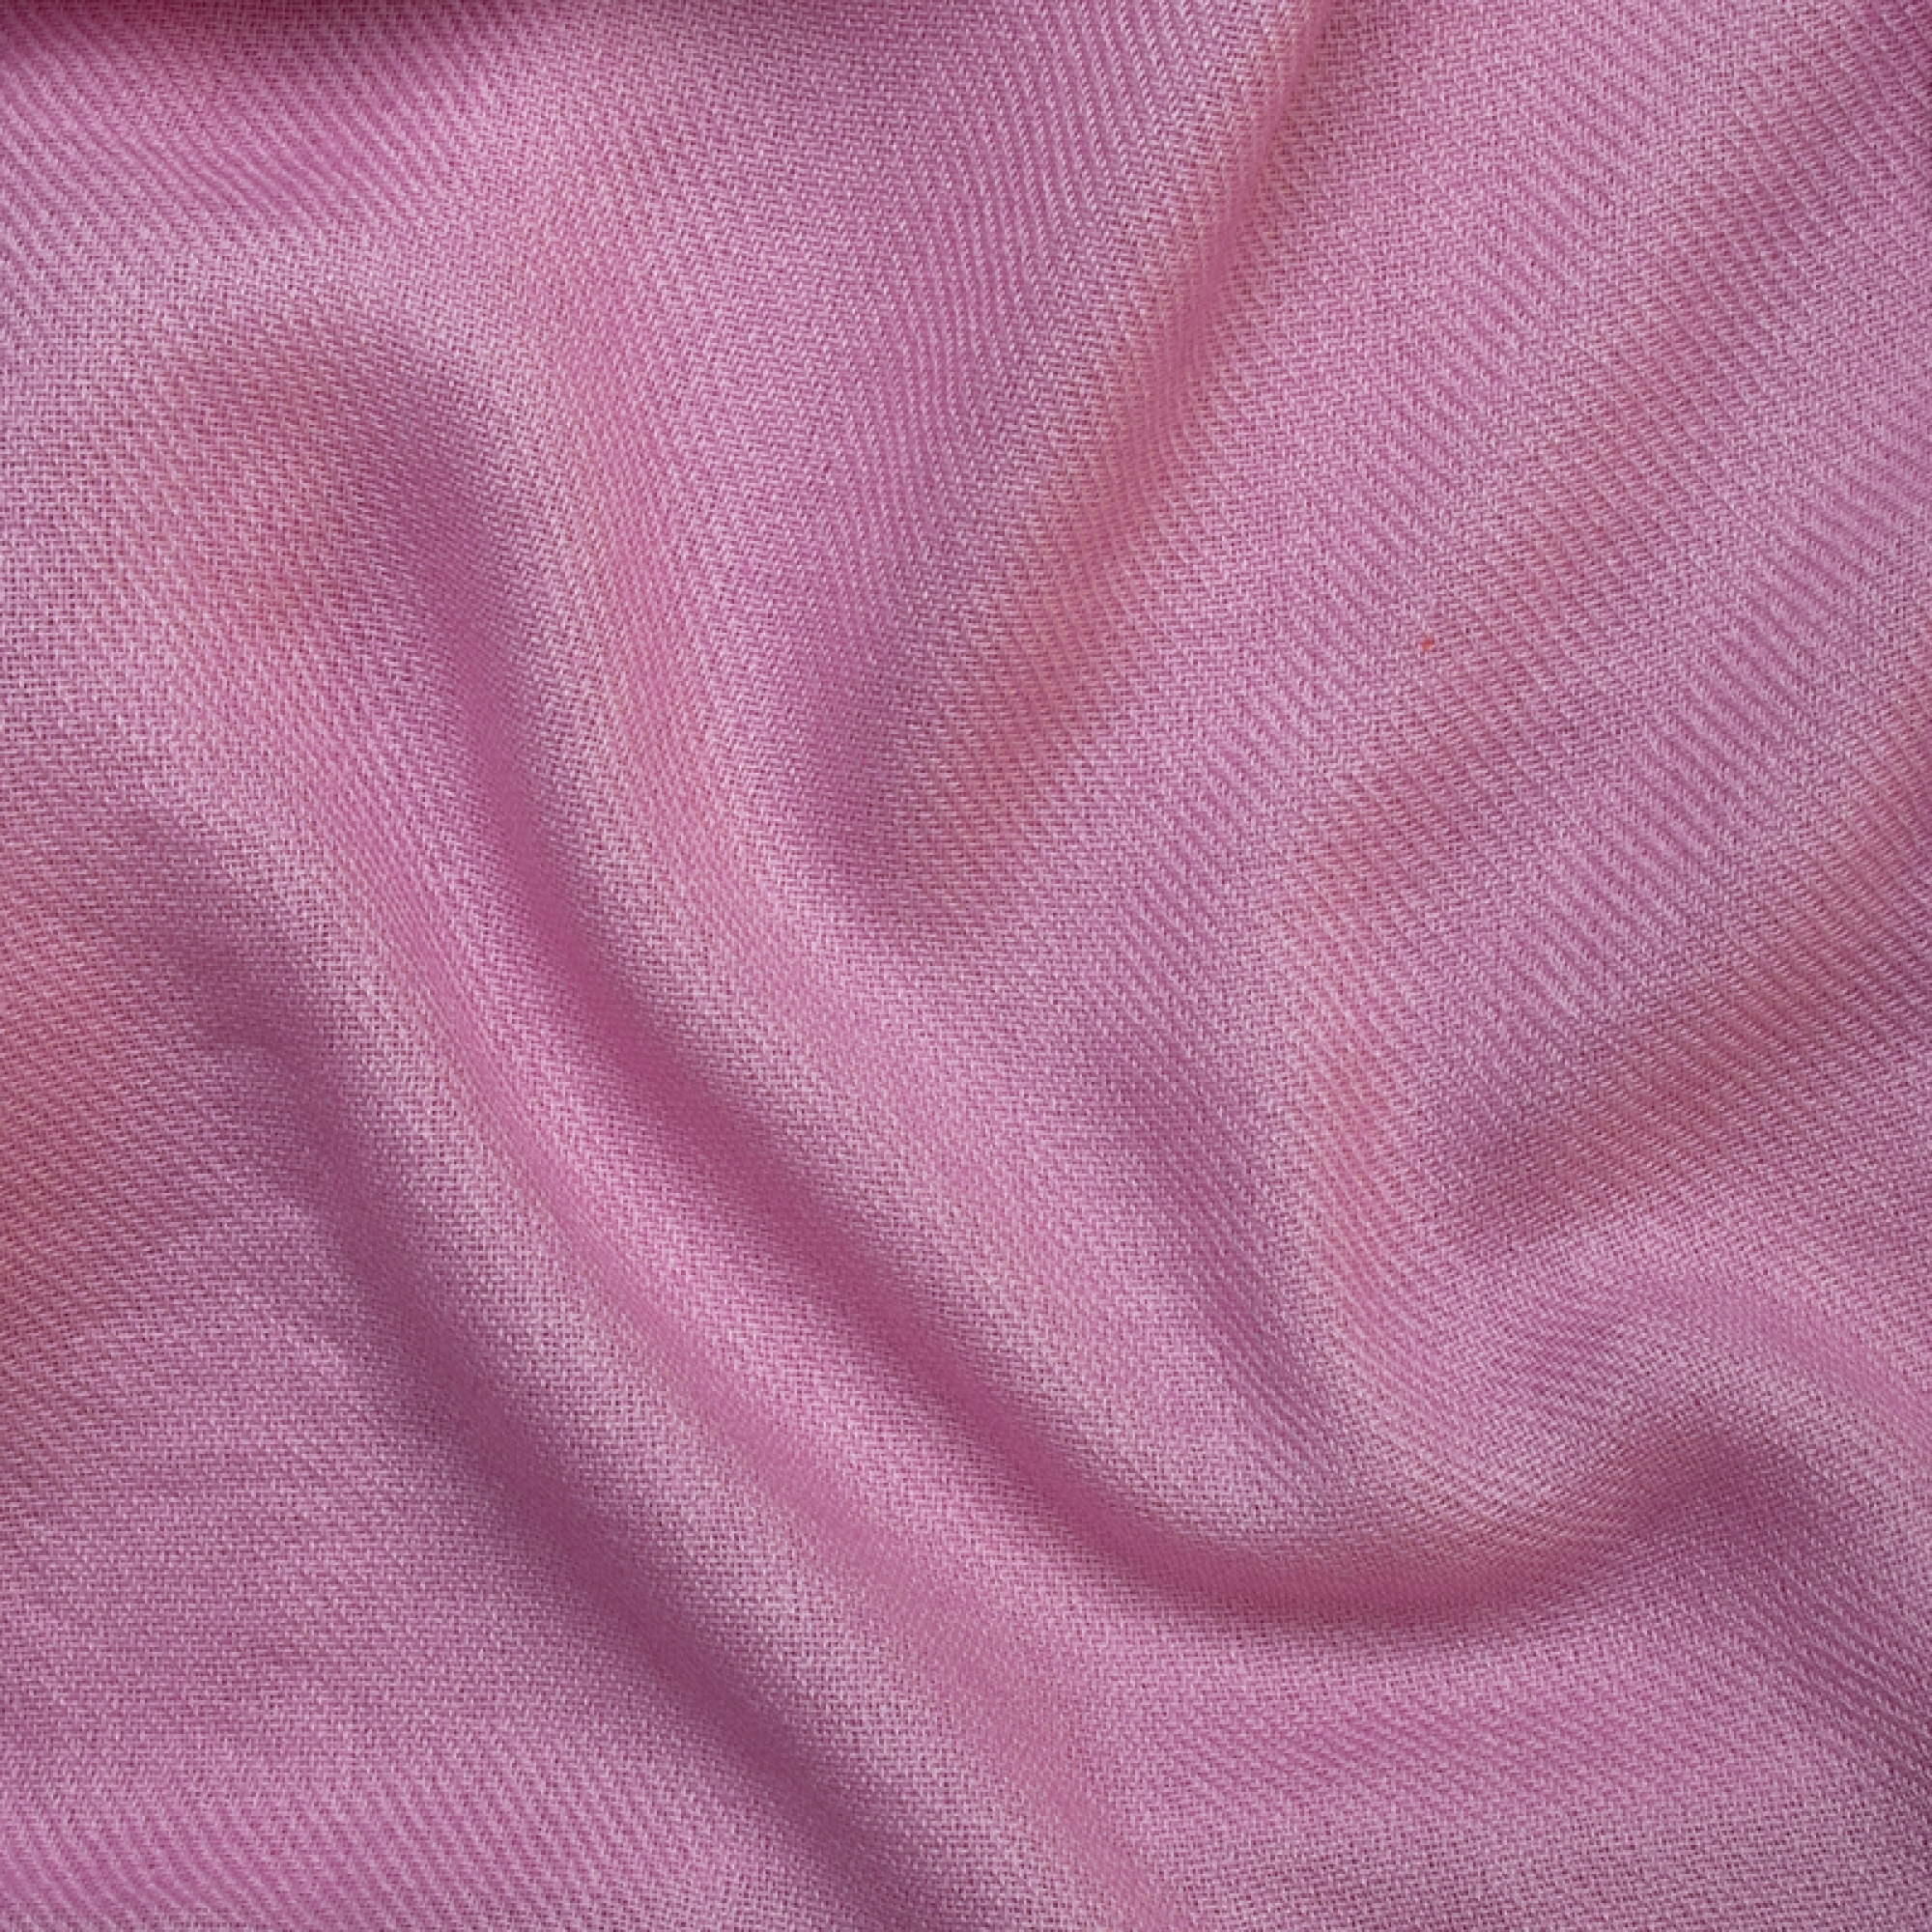 Cashmere accessories toodoo plain l 220 x 220 pink lavender 220x220cm